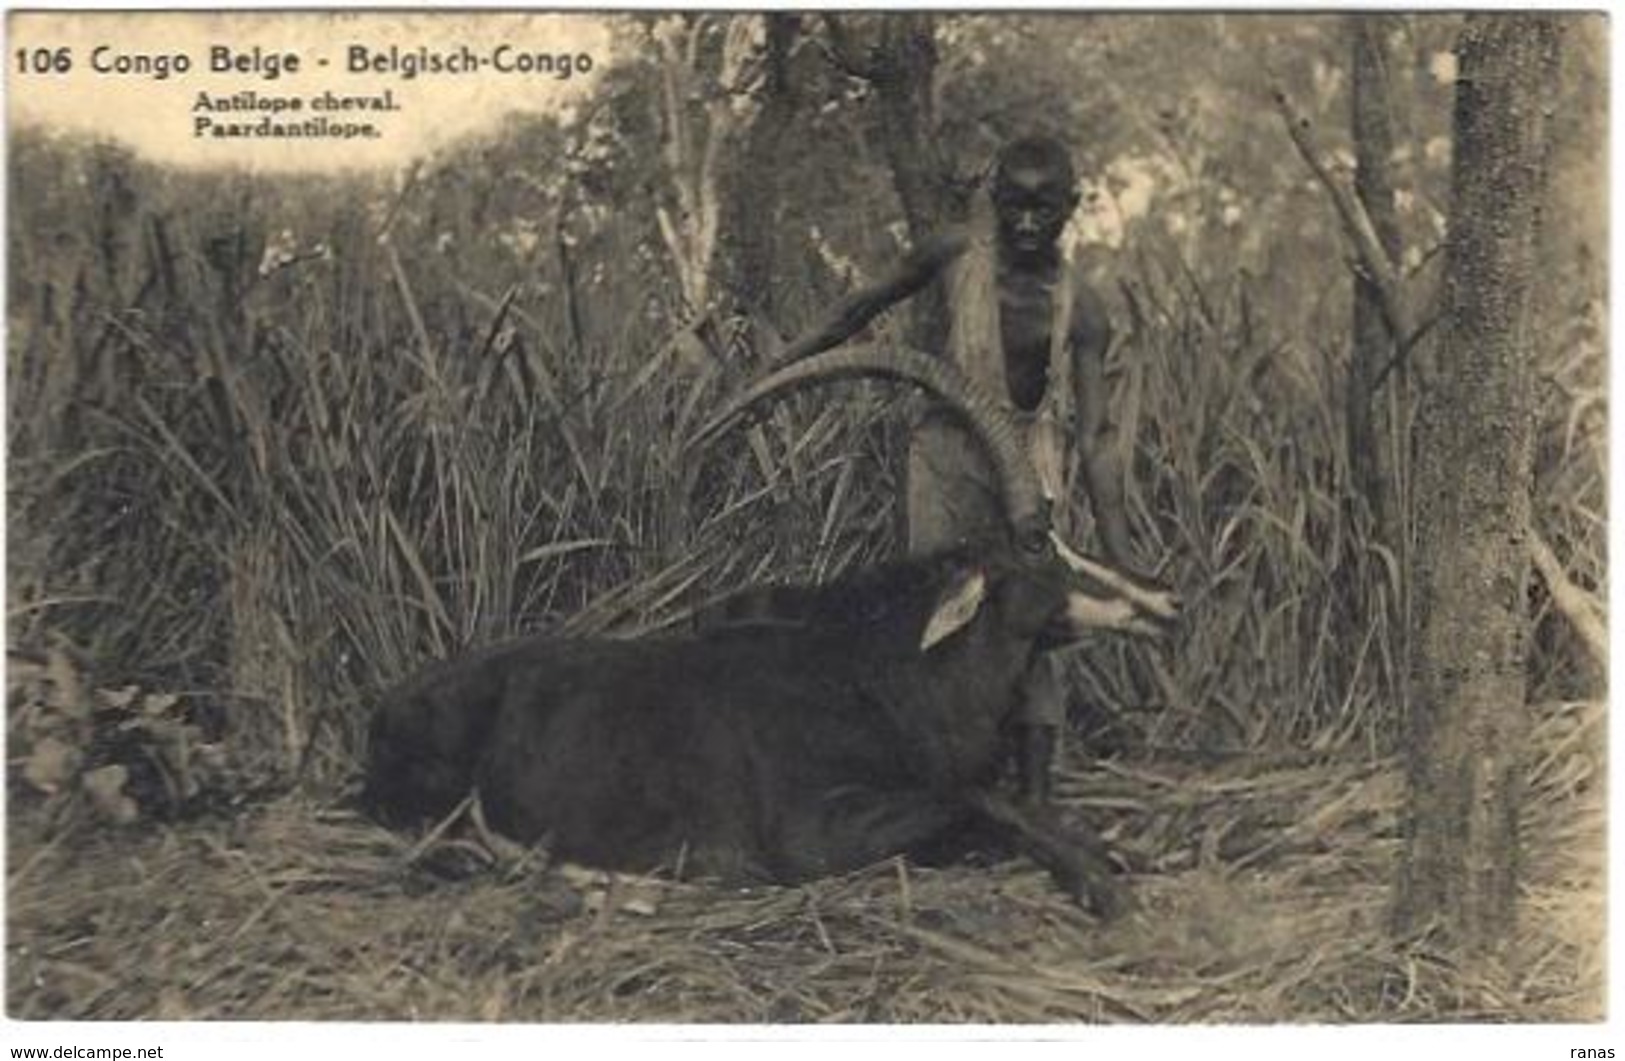 CPA Chasse Afrique Noire Antilope Cheval Circulé Congo Belge Entier Postal Voir Scan Du Dos - Congo Belga